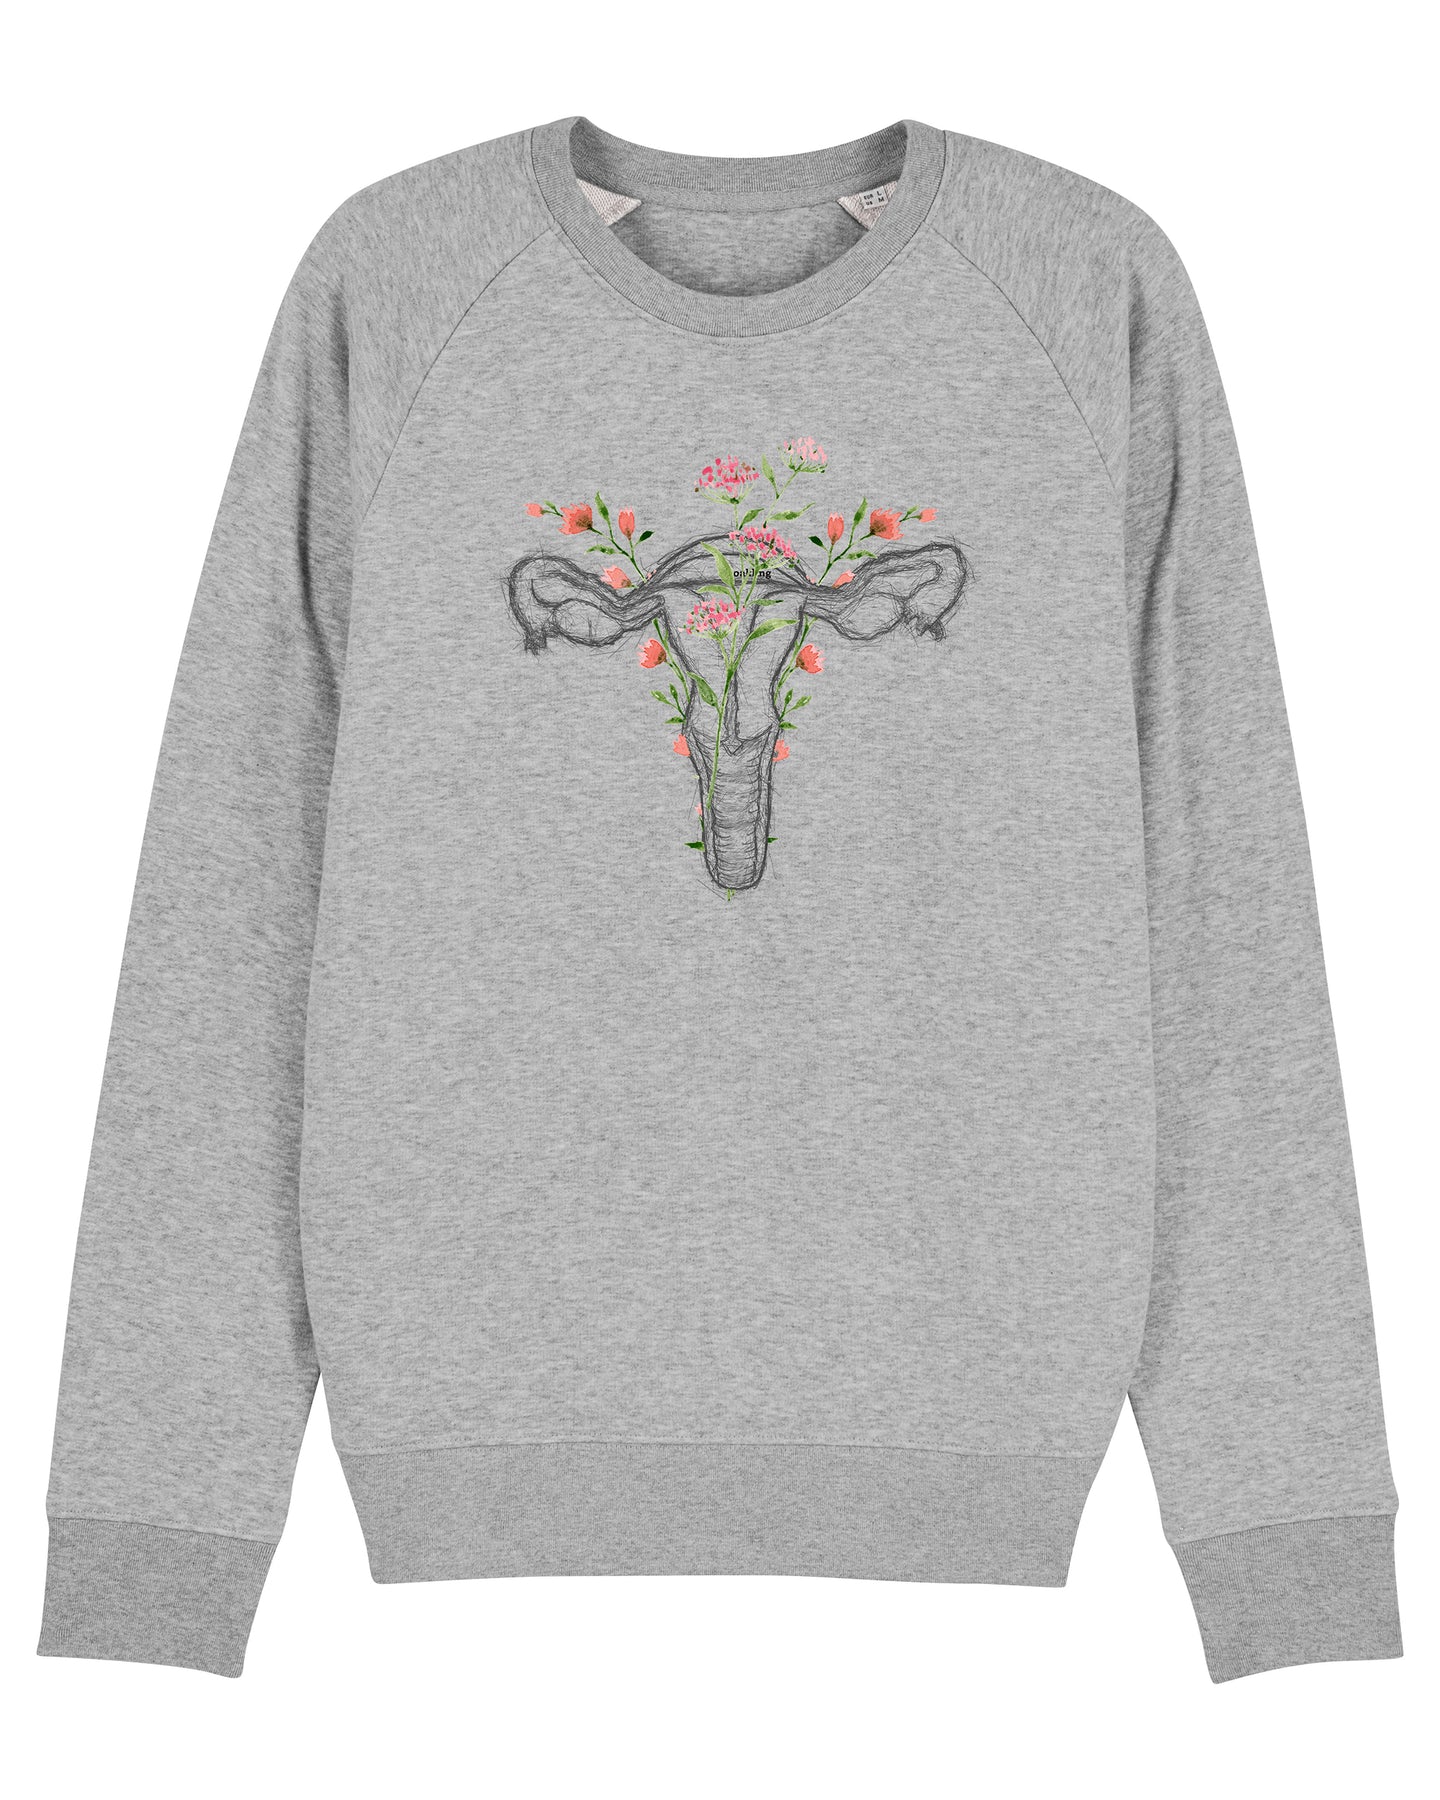 Organic Raglan Sweatshirt - The Mutter